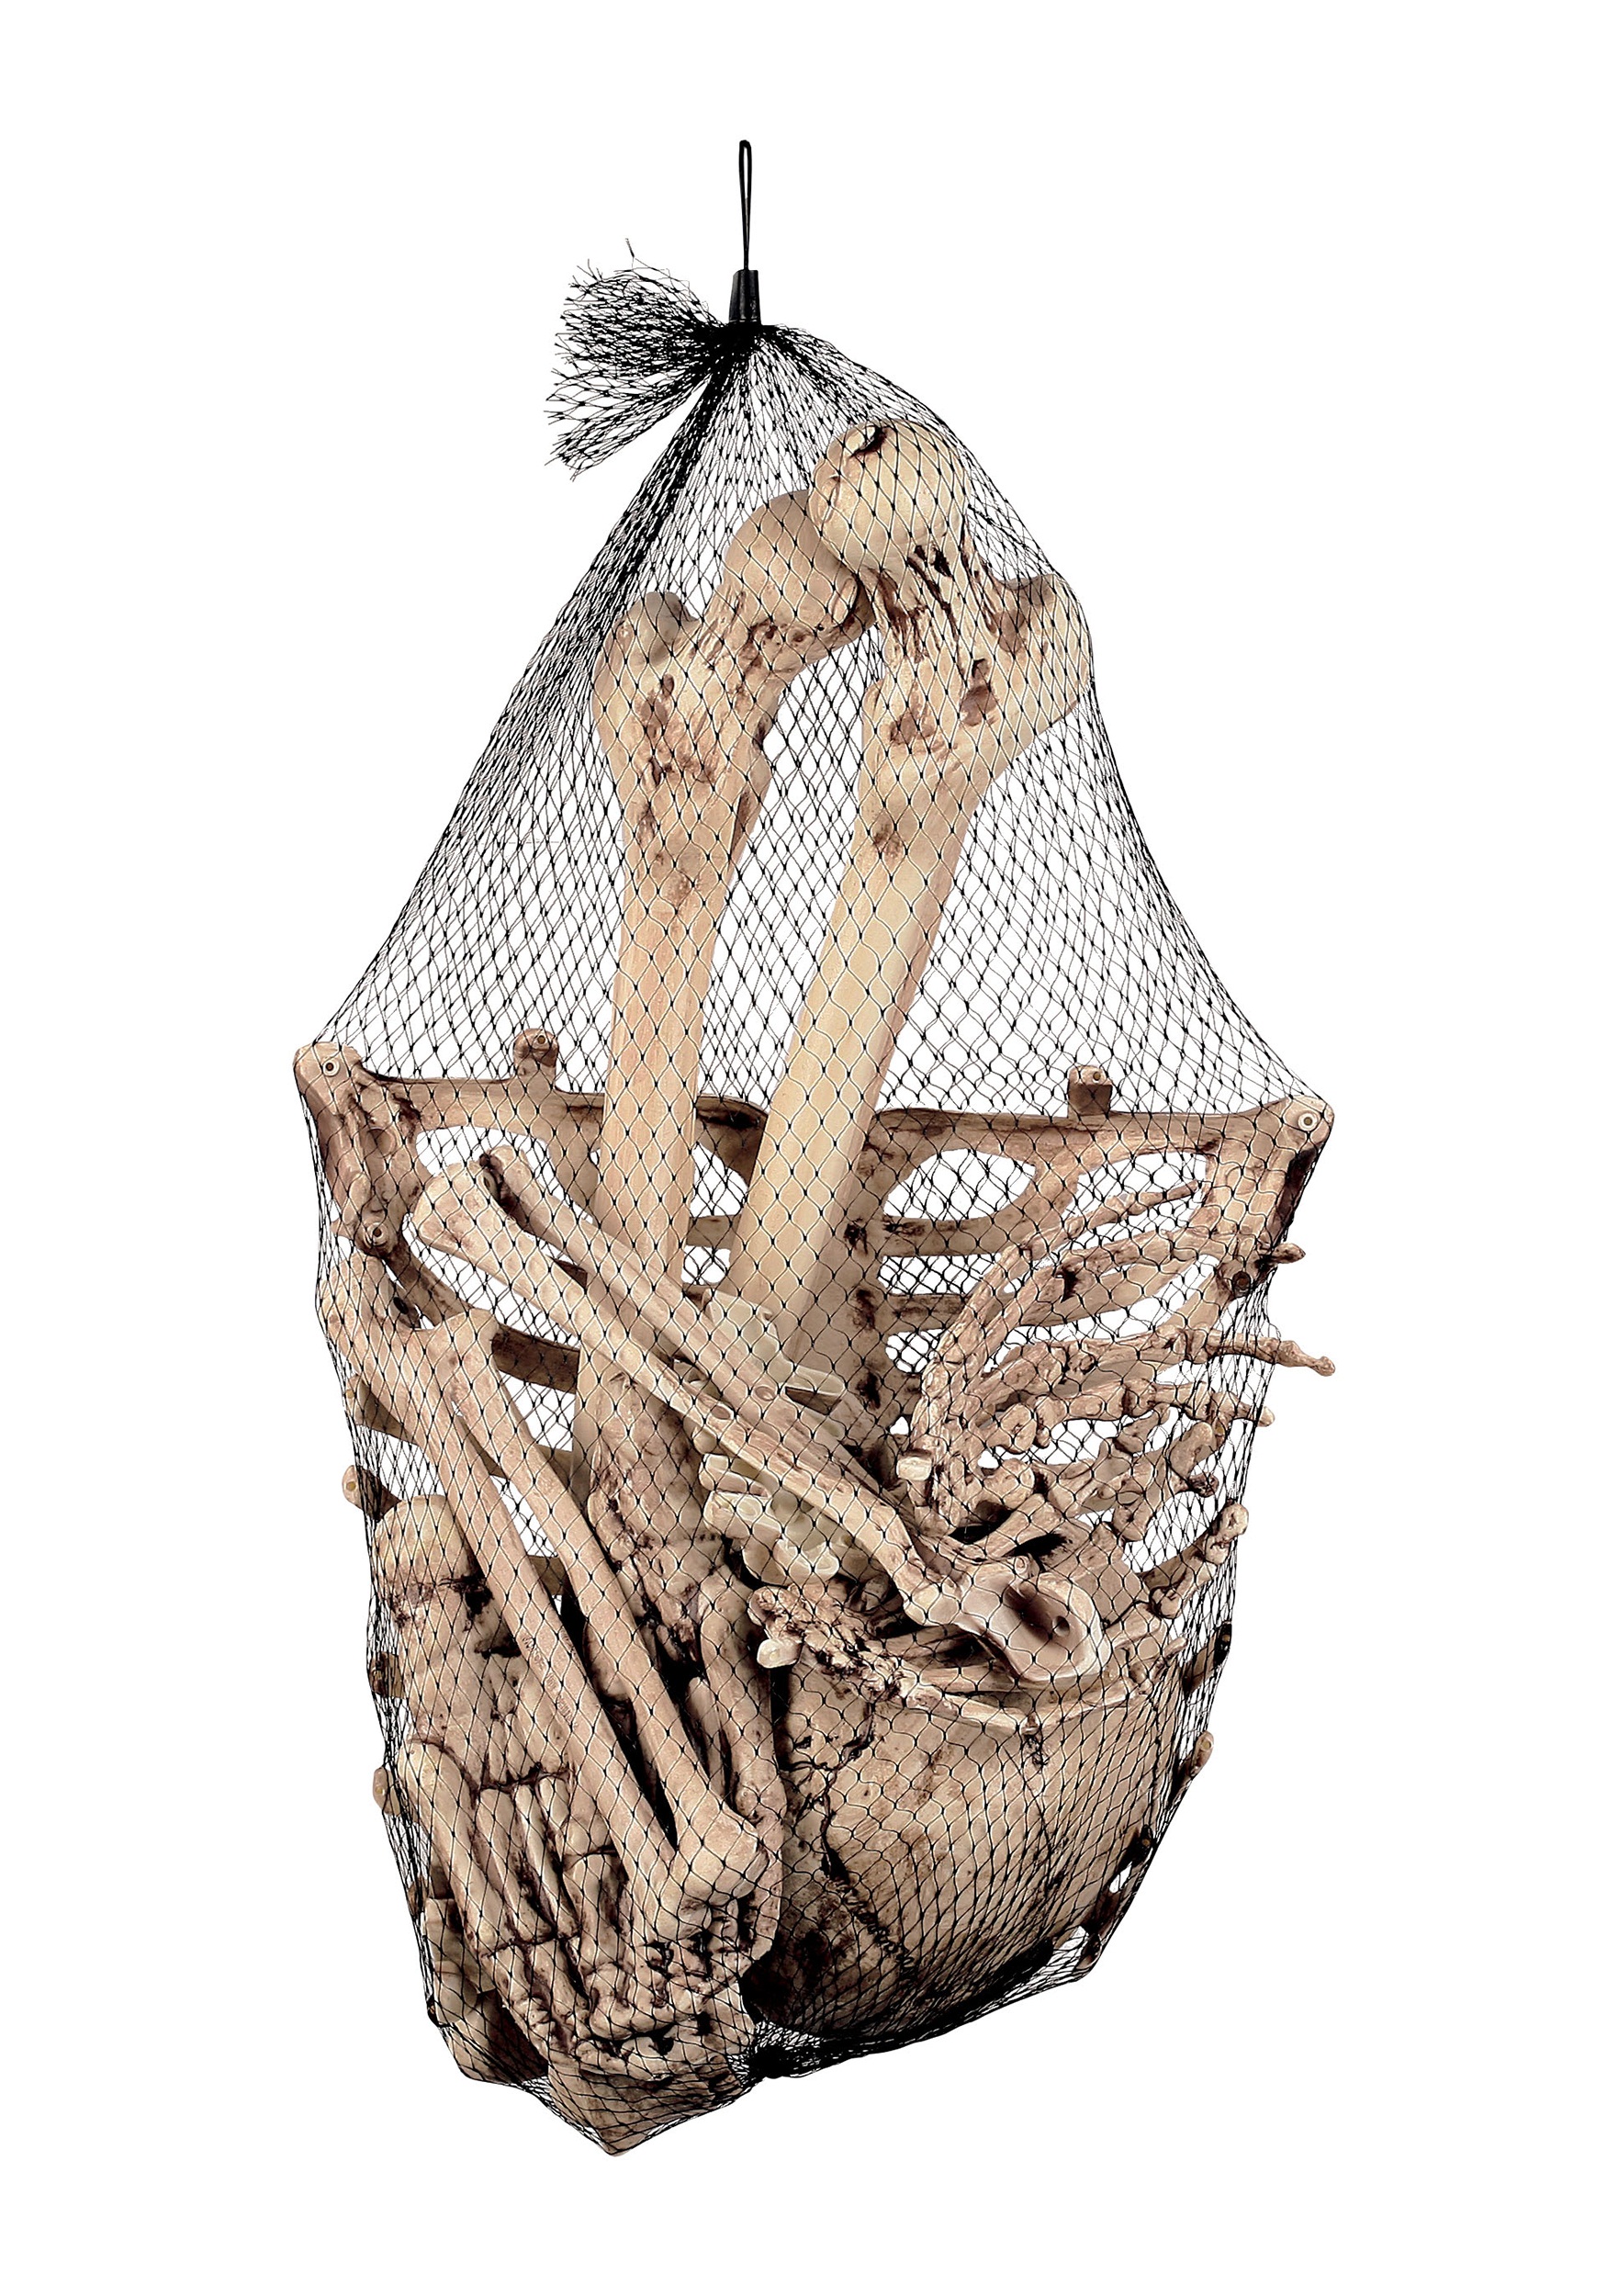 Bag of bones. Кинг с. "мешок с костями". Мешочек с костями. Мешок с костями (2011).